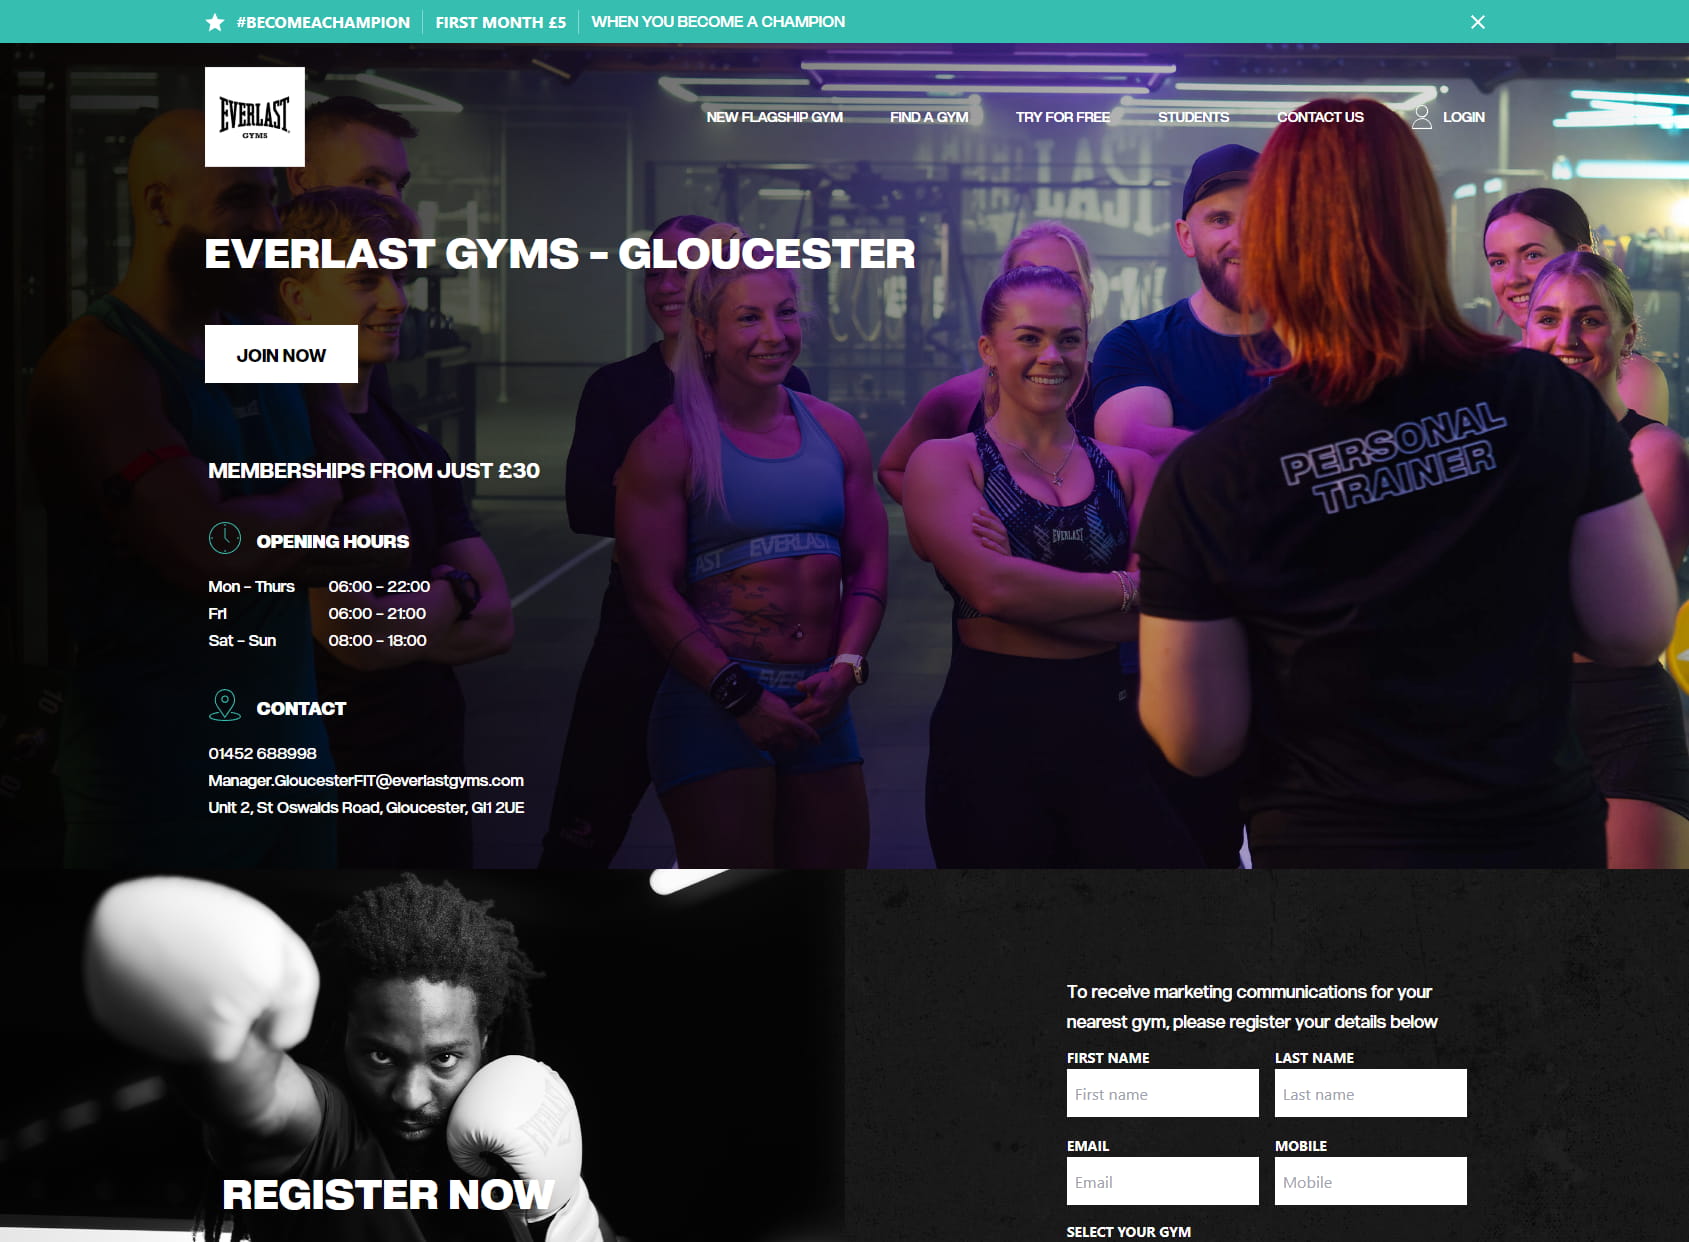 Everlast Gyms - Gloucester